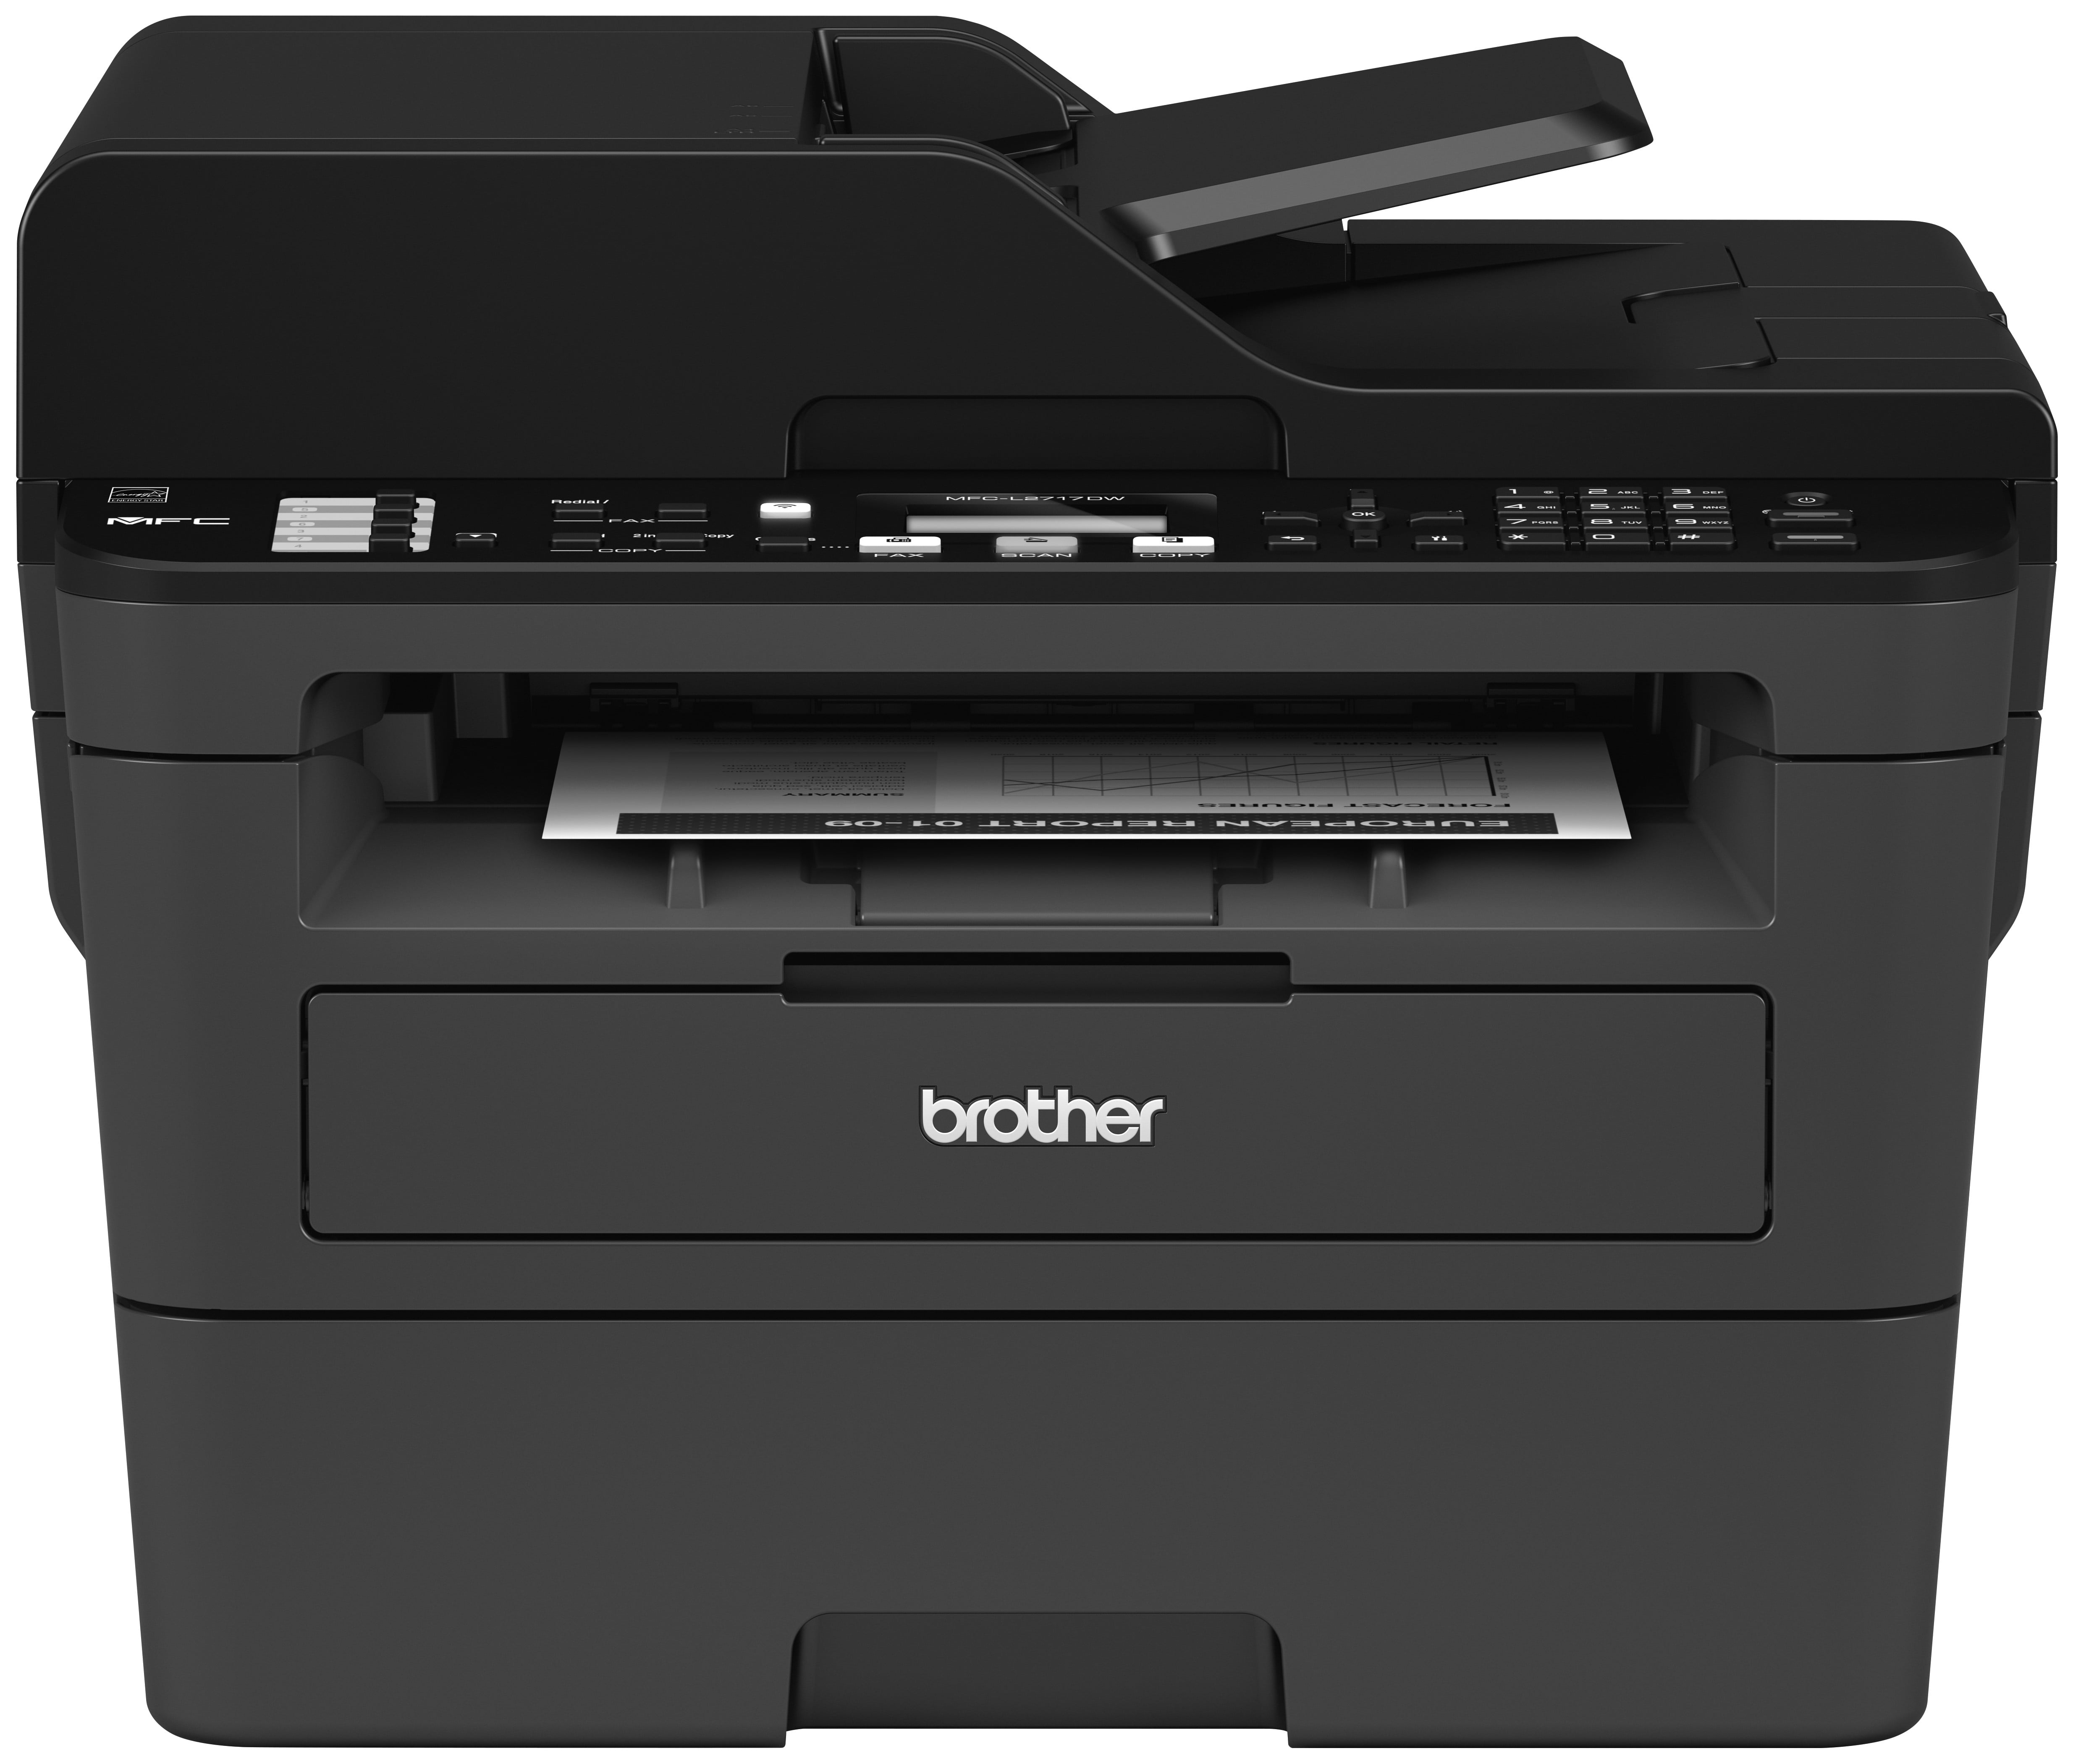 Brother MFC-L2717DW Wireless Network Monochrome Laser All-in-One Printer/Copier/Fax/Scanner with Duplex